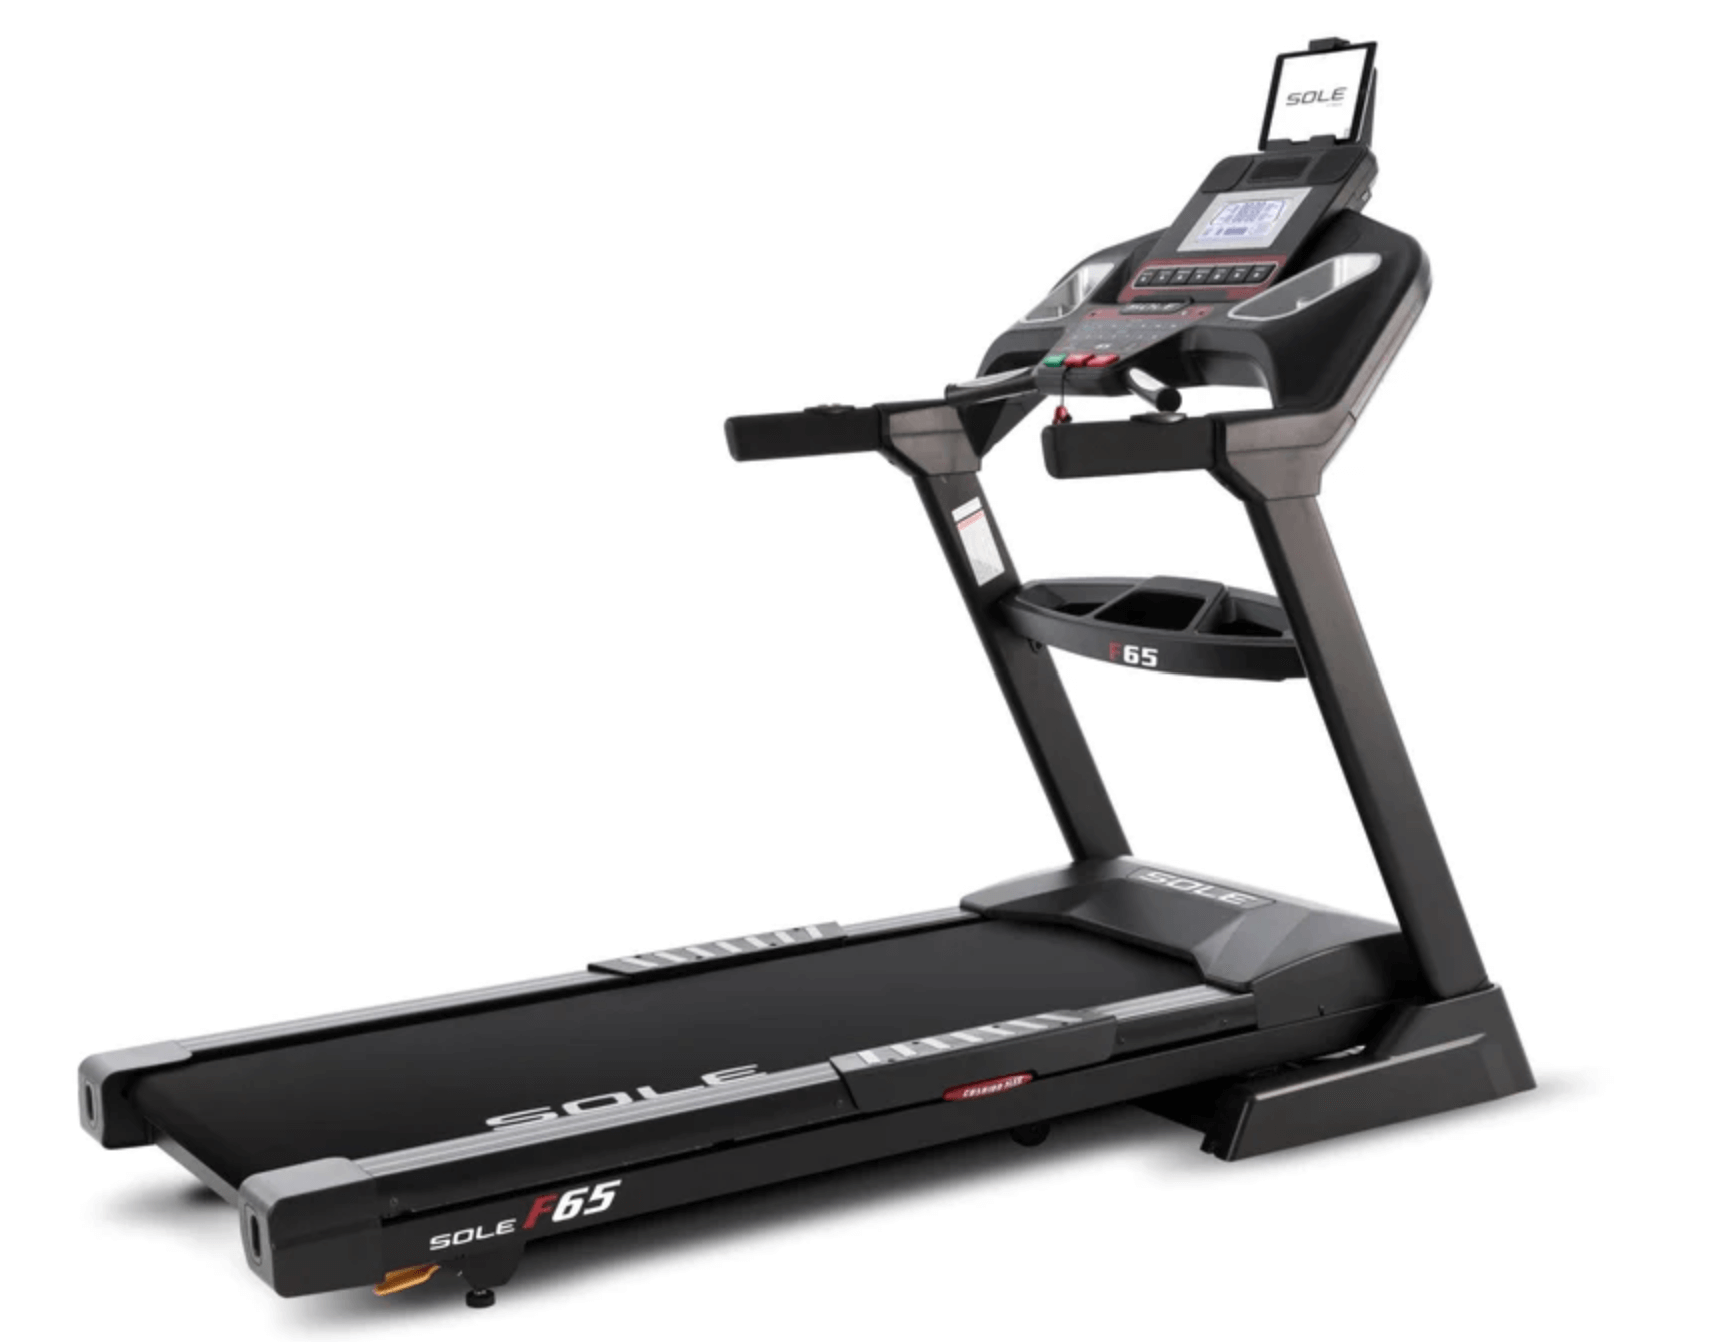 SOLE F65 folding treadmill